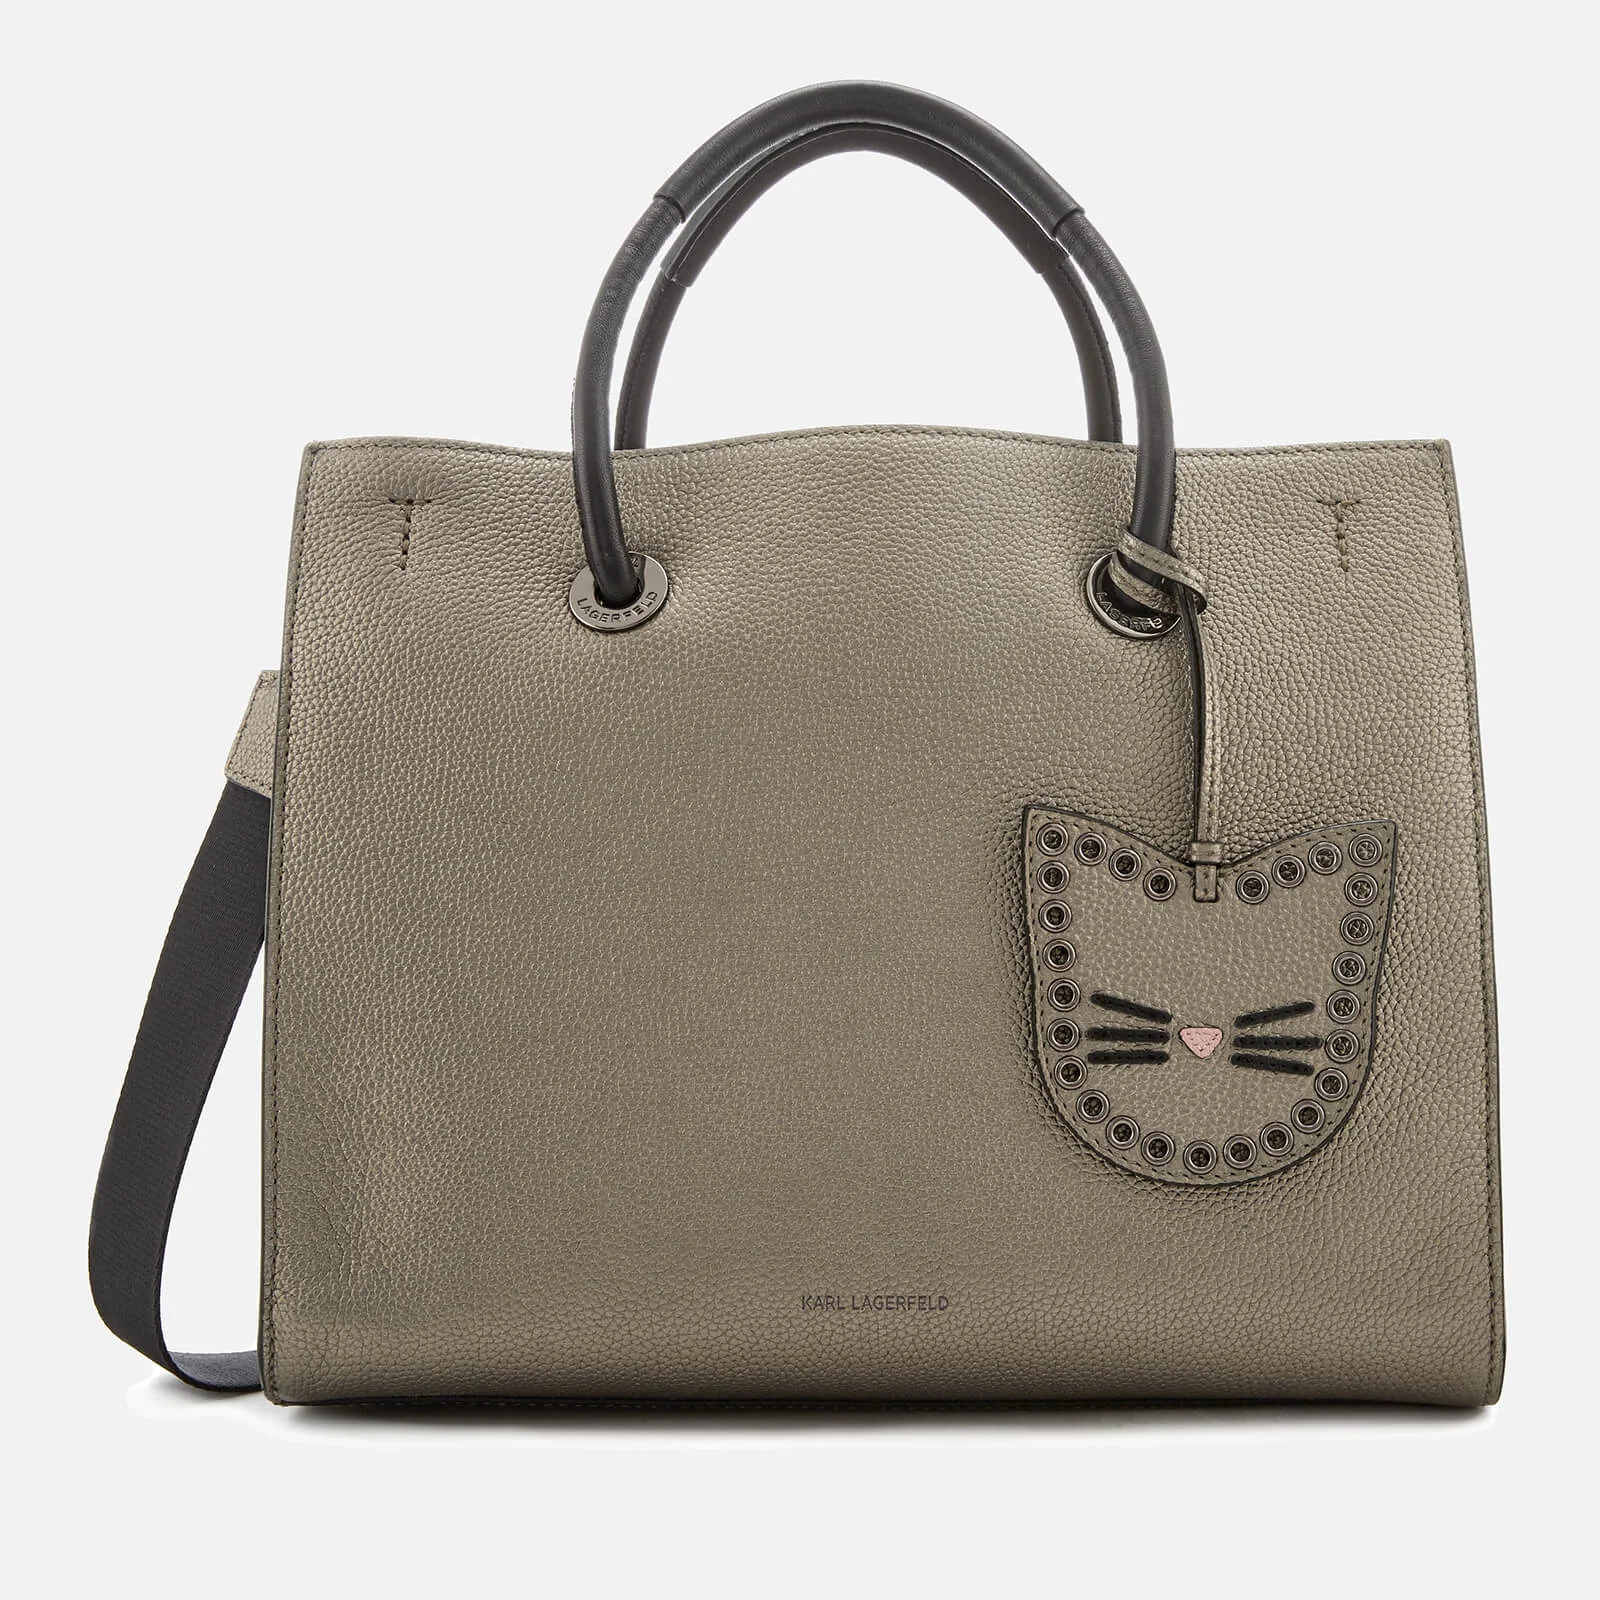 Karl Lagerfeld Women's K/Karry All Shopper Bag - Metallic Taupe Image 1